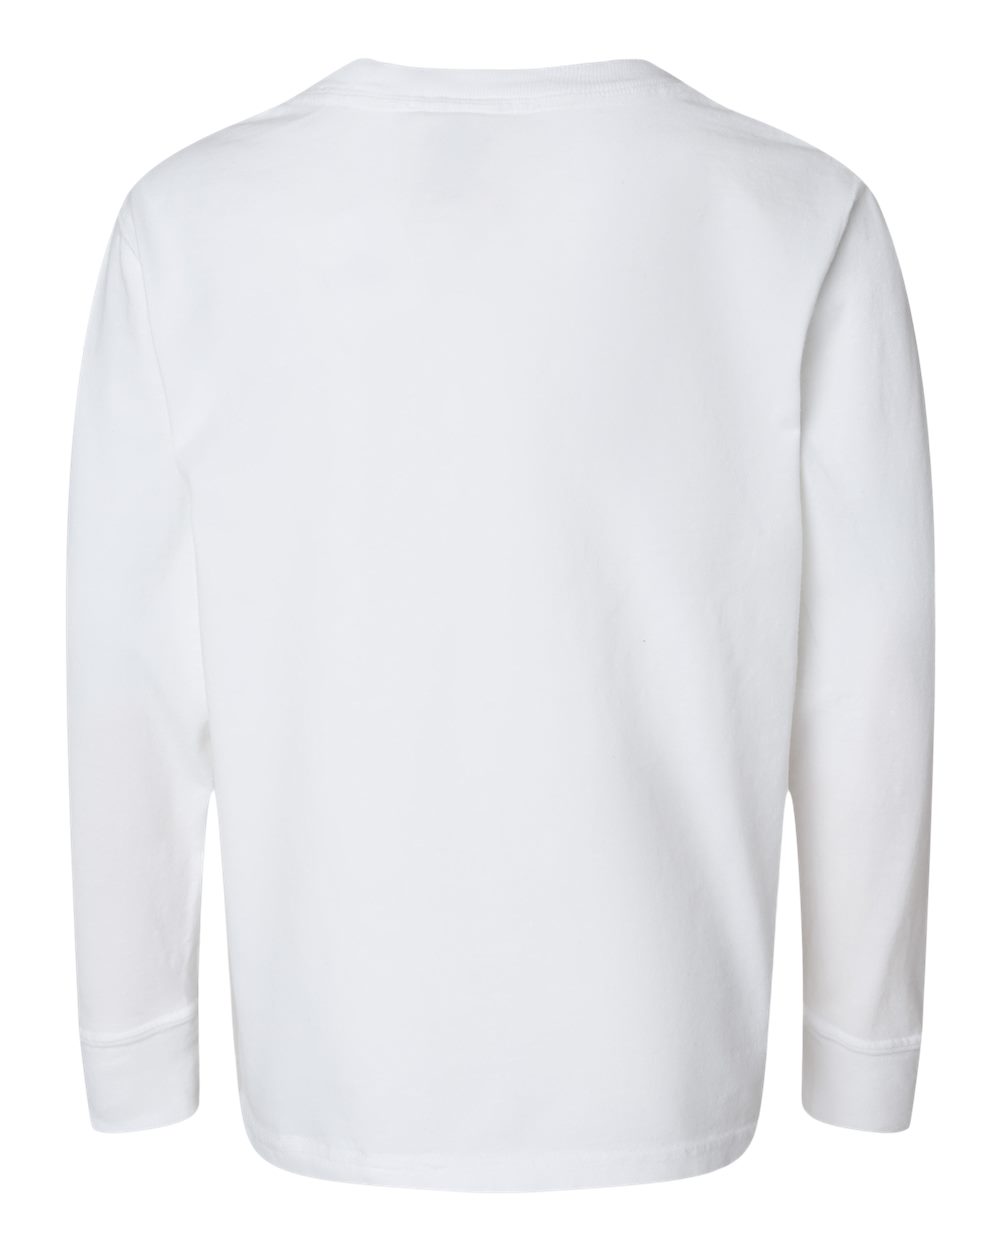 ComfortWash Men's Garment Dyed Long Sleeve T-Shirt